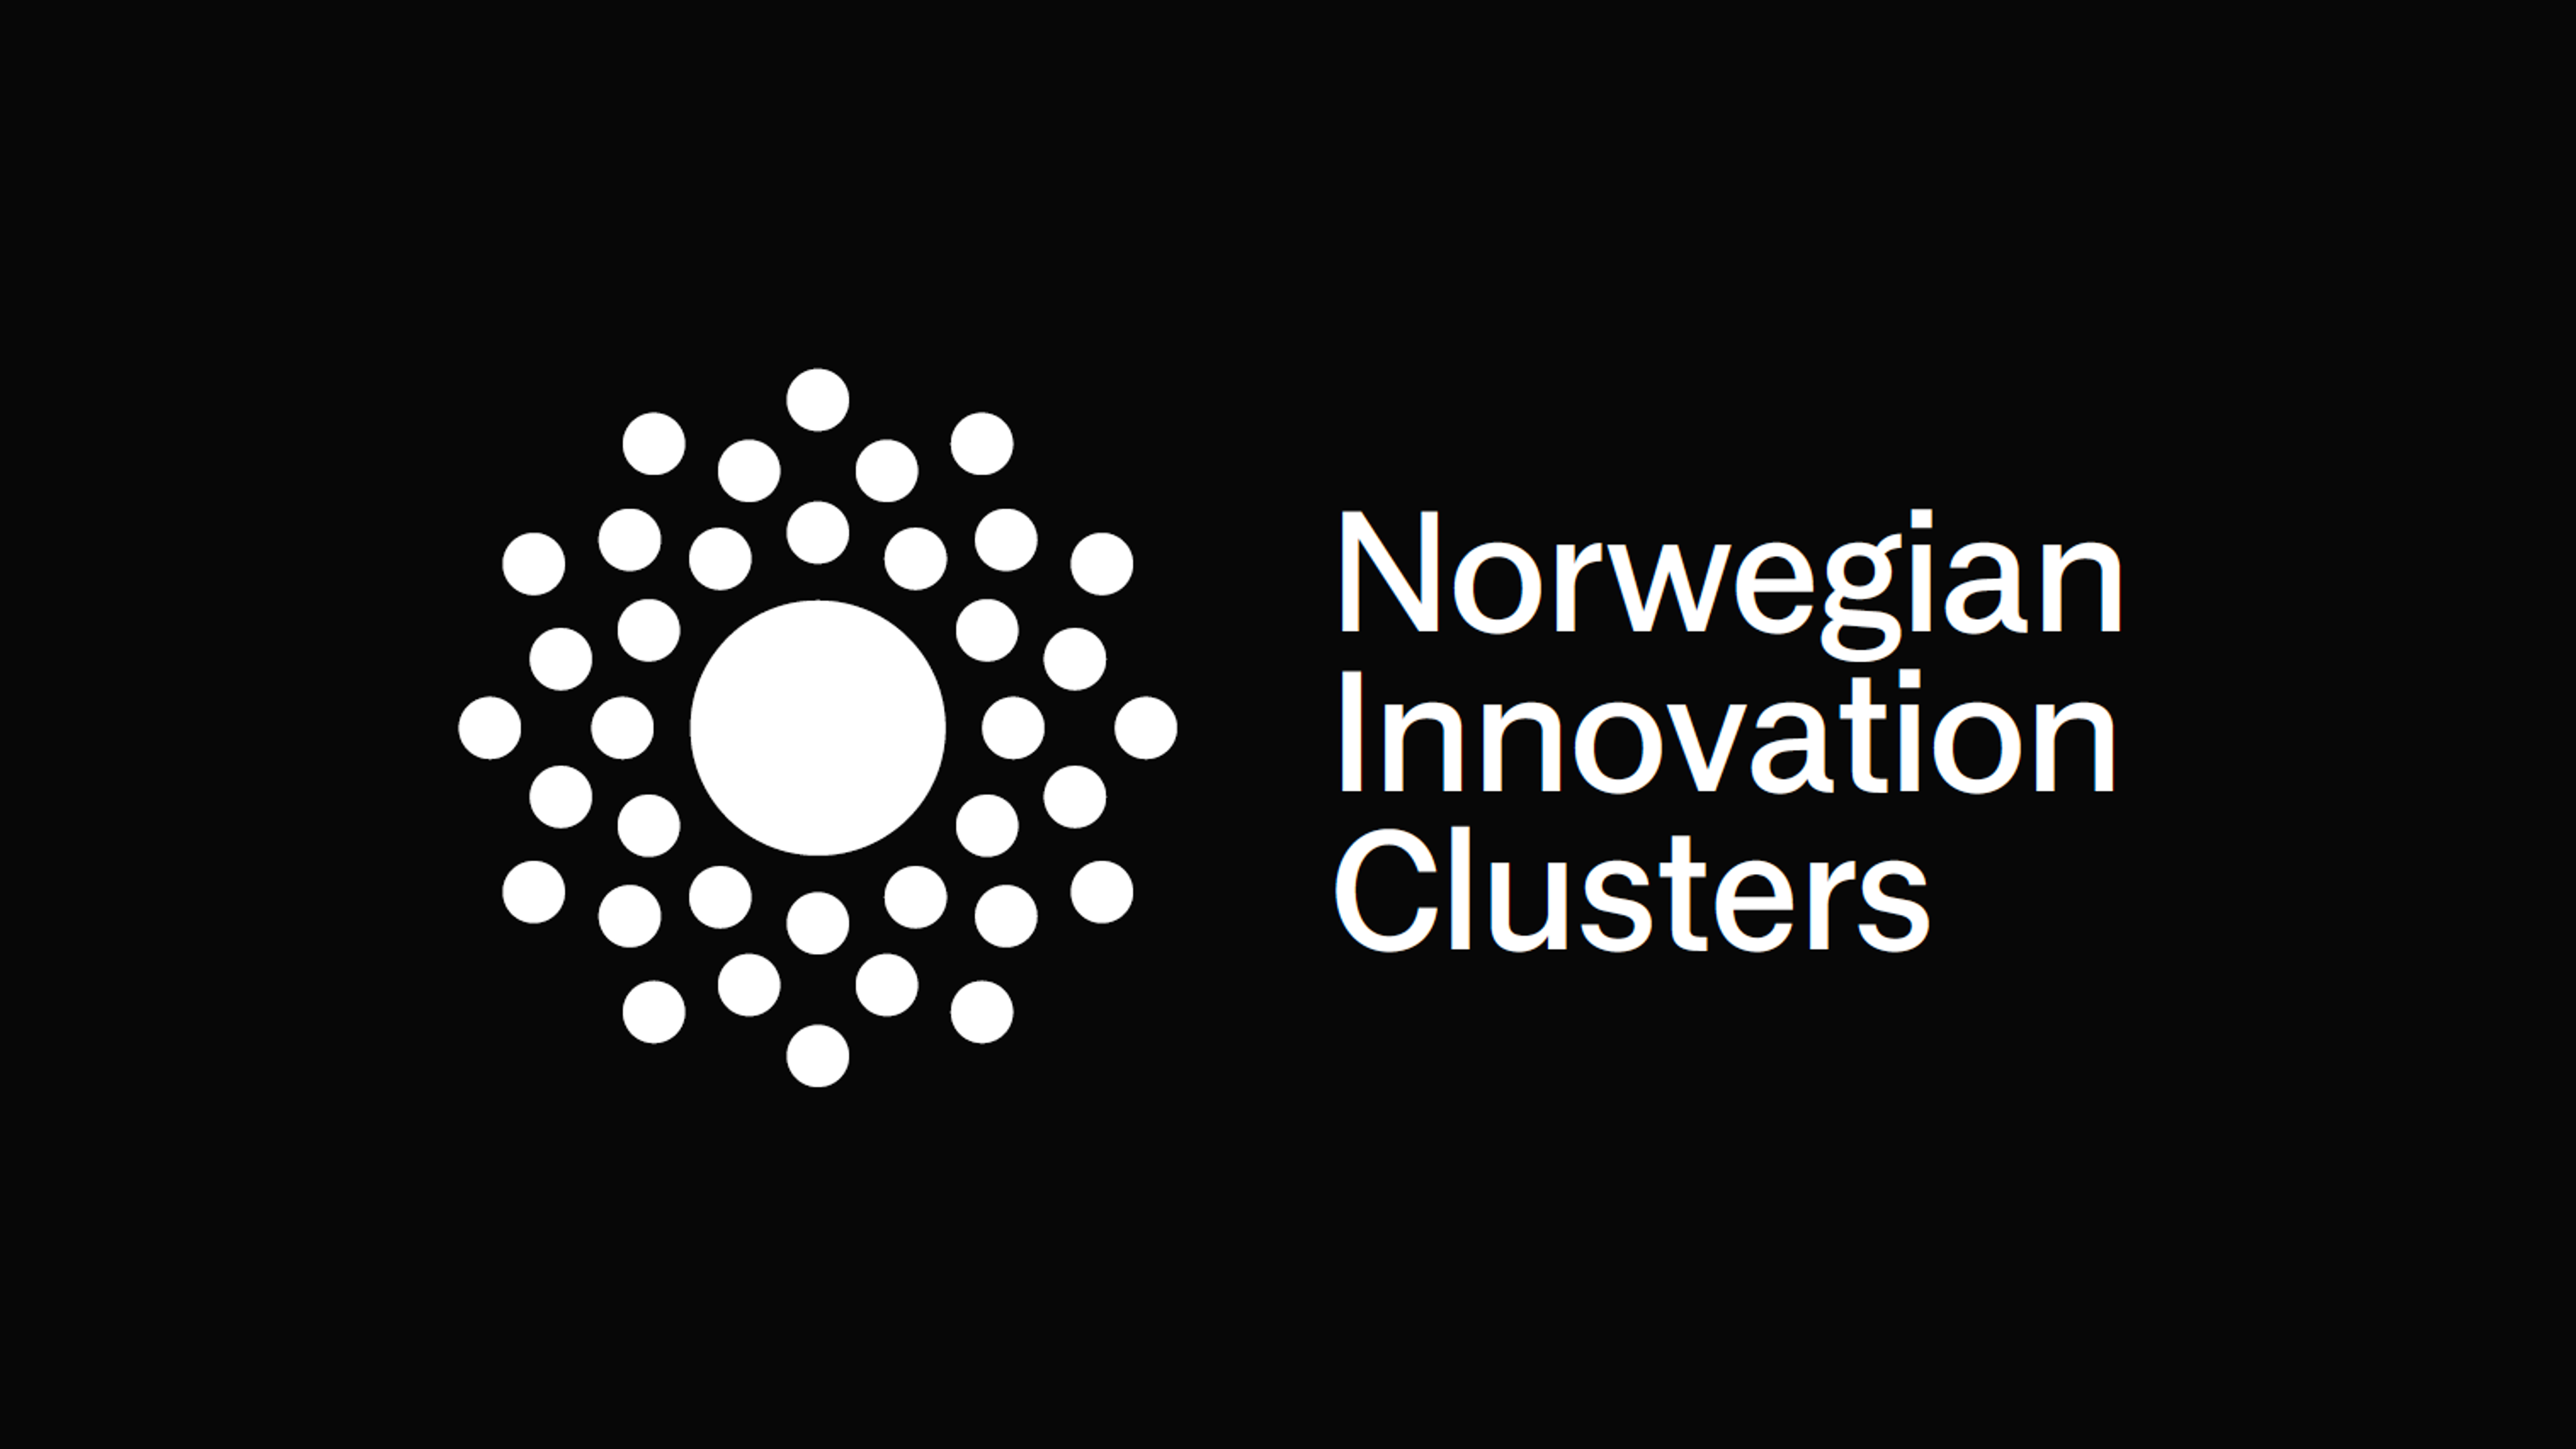 Norwegian Innovation Clusters - sort logo